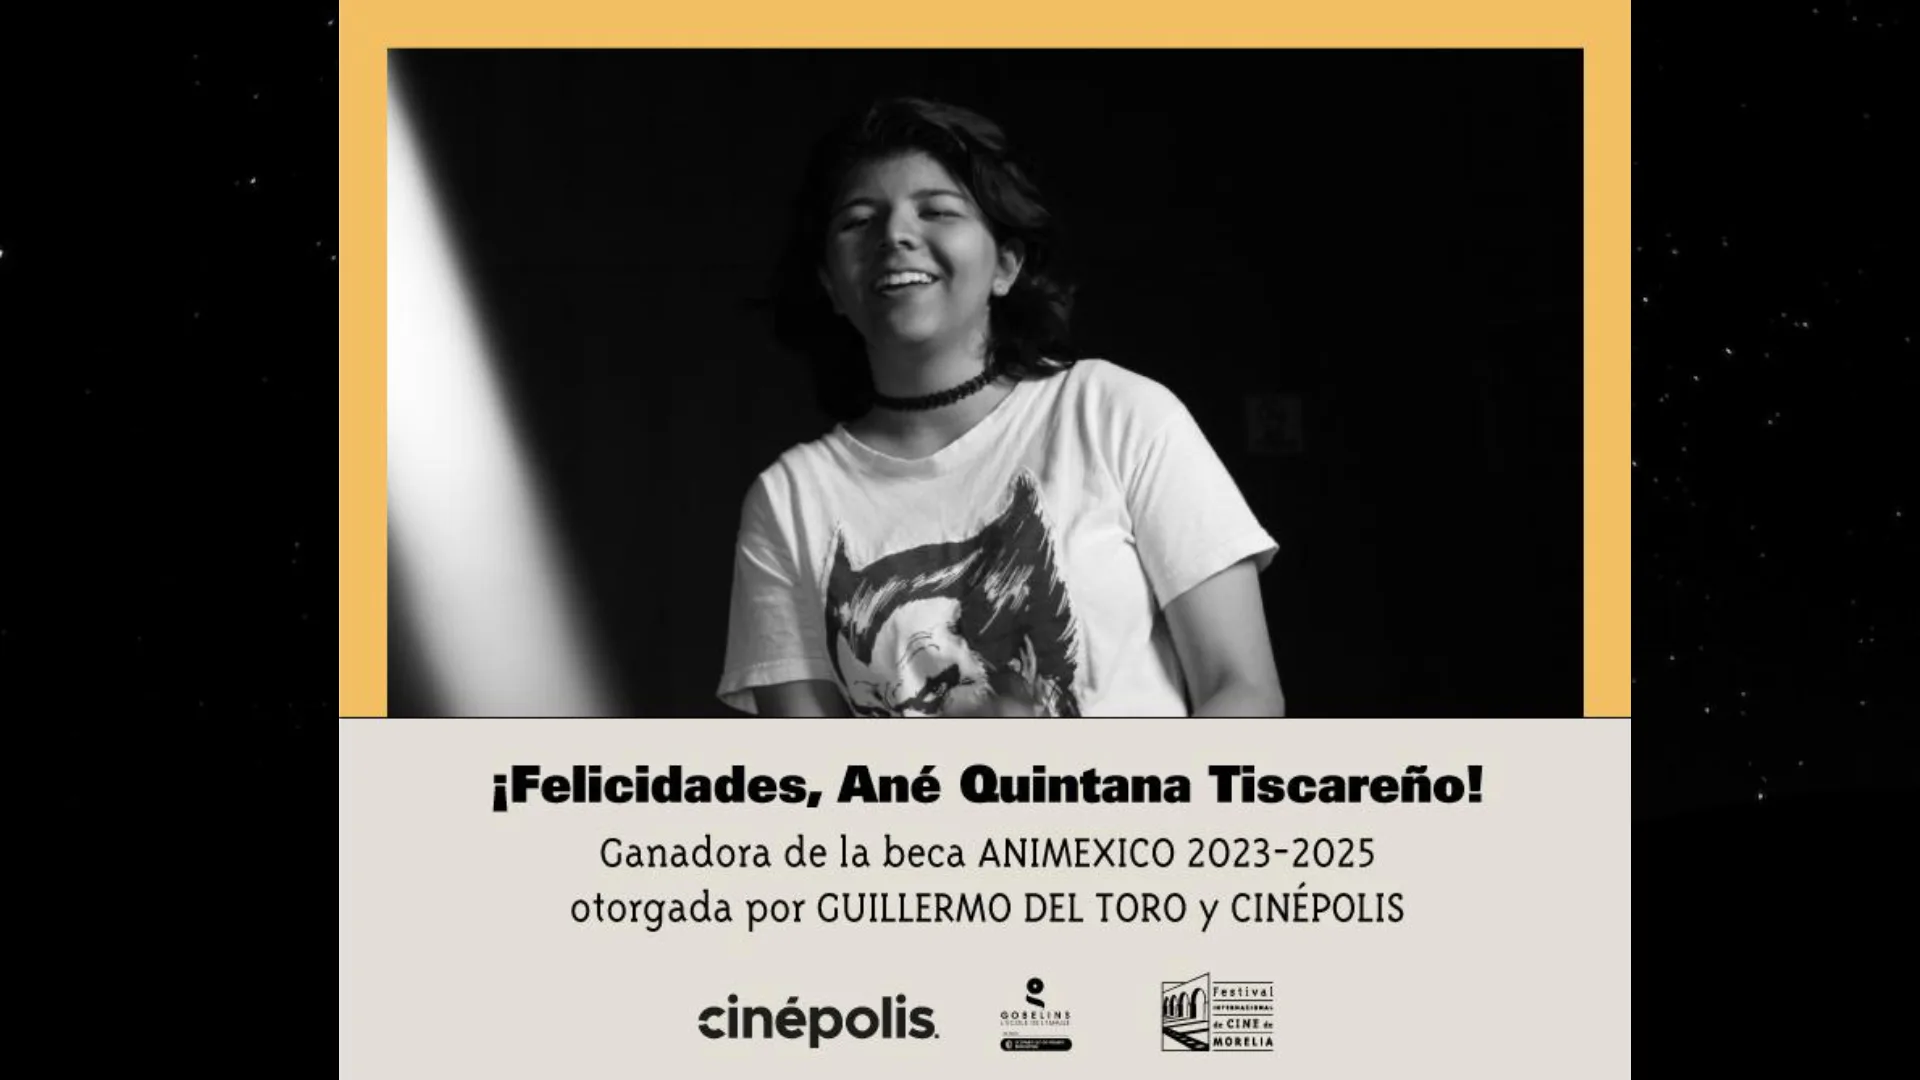 Alejandra Ané Quintana Tiscareño Guillermo del Toro